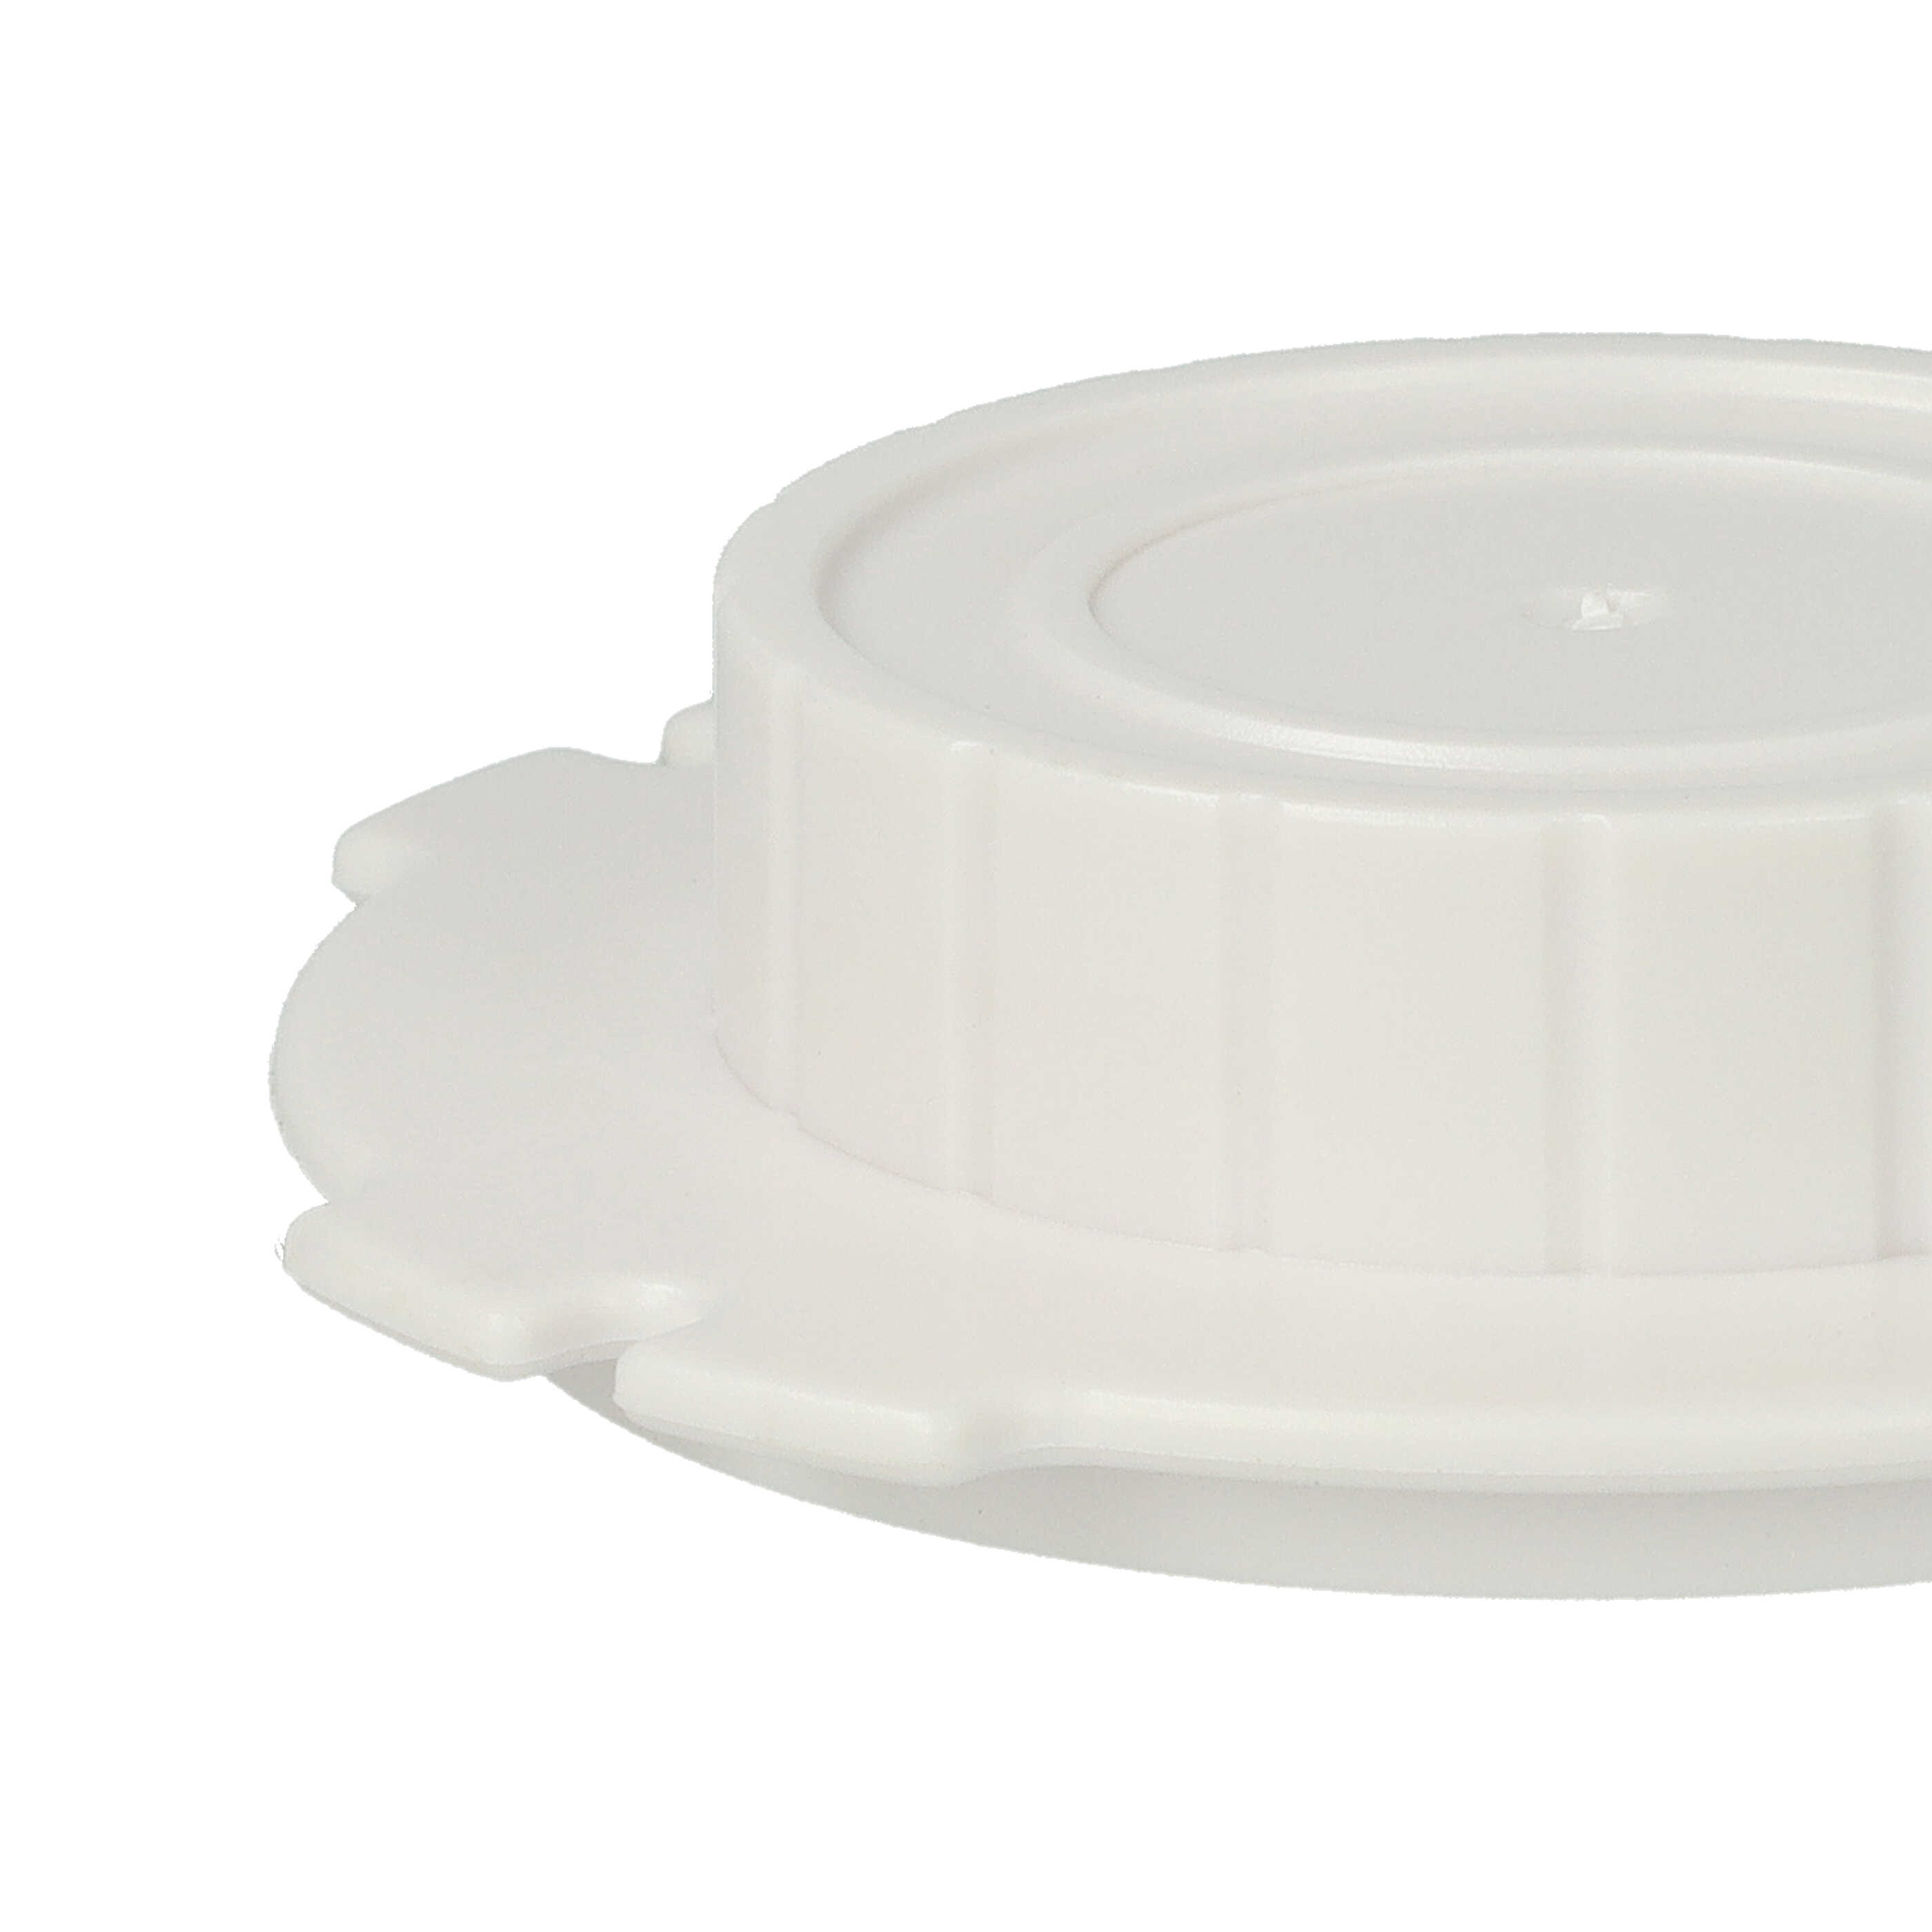 Housing Cap 68 mm suitable for Arri PL mount lenses Camera, DSLR - Plastic, White